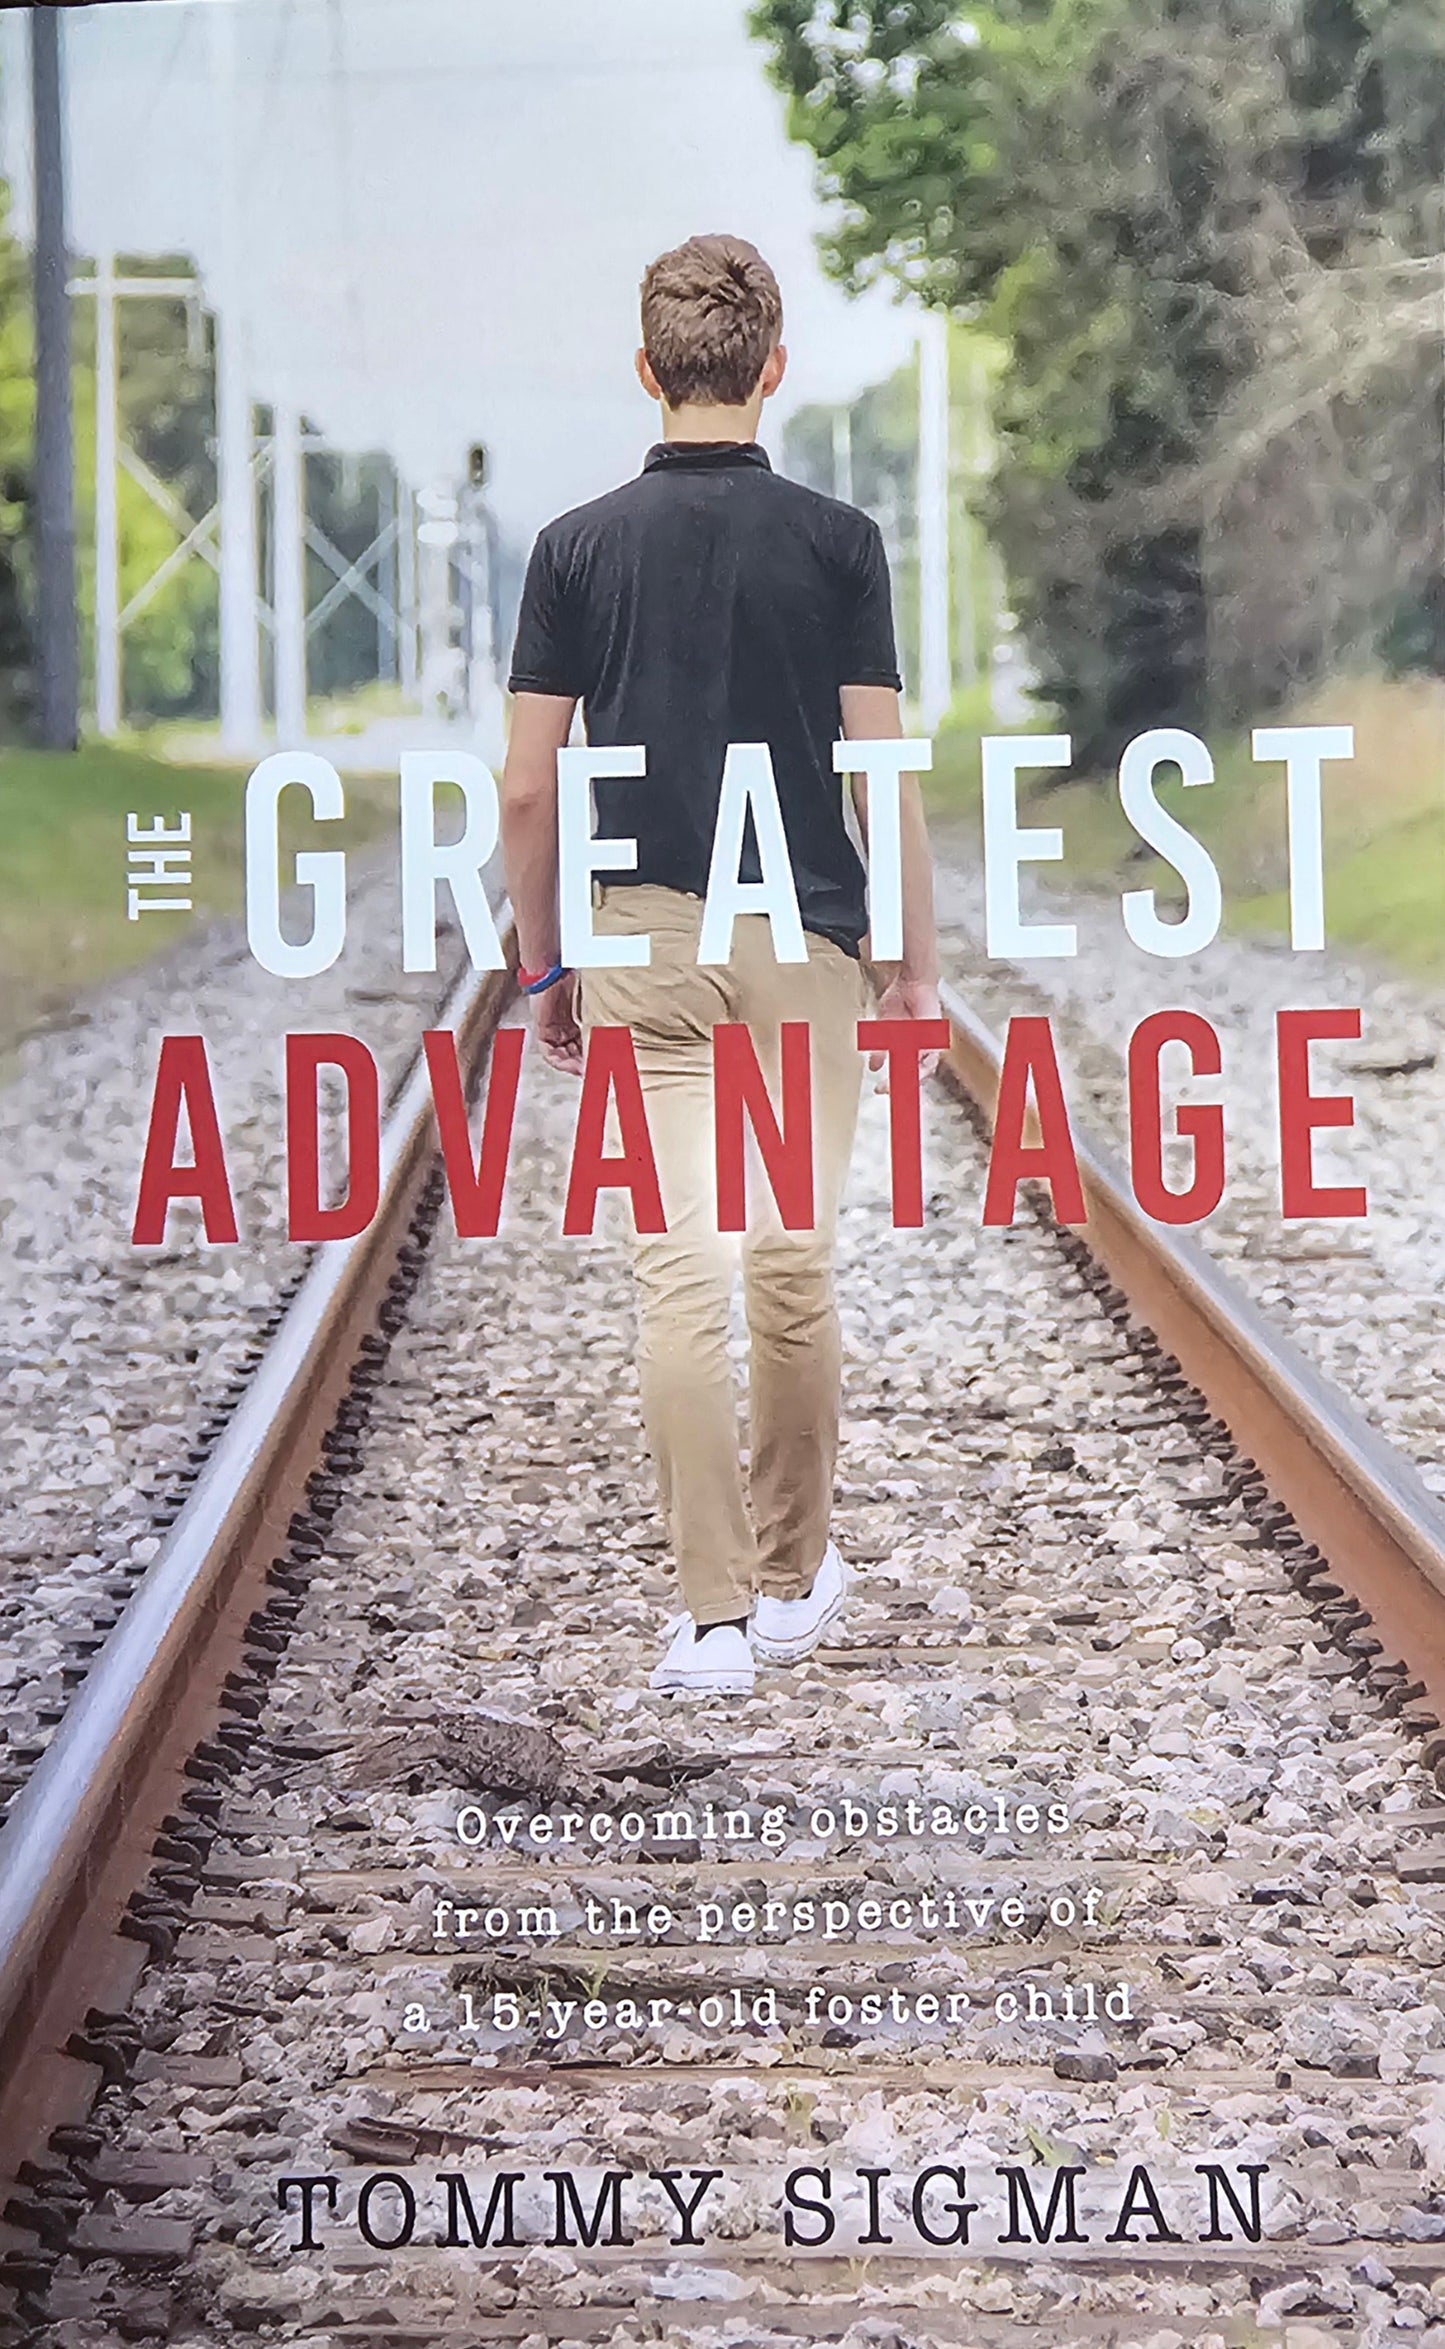 The Greatest Advantage